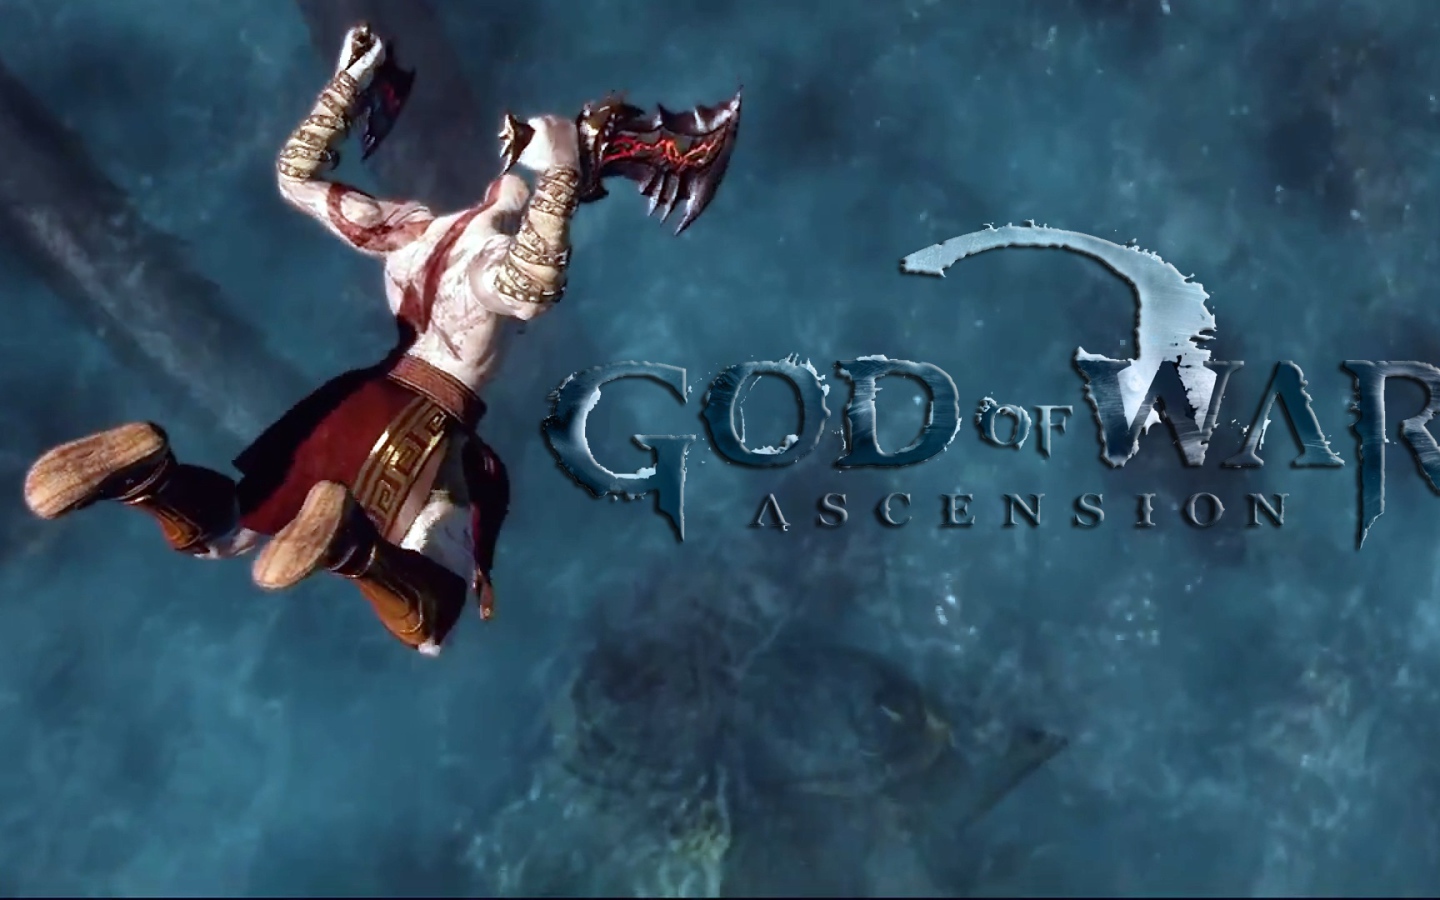 God of War: Ascension: синий обои